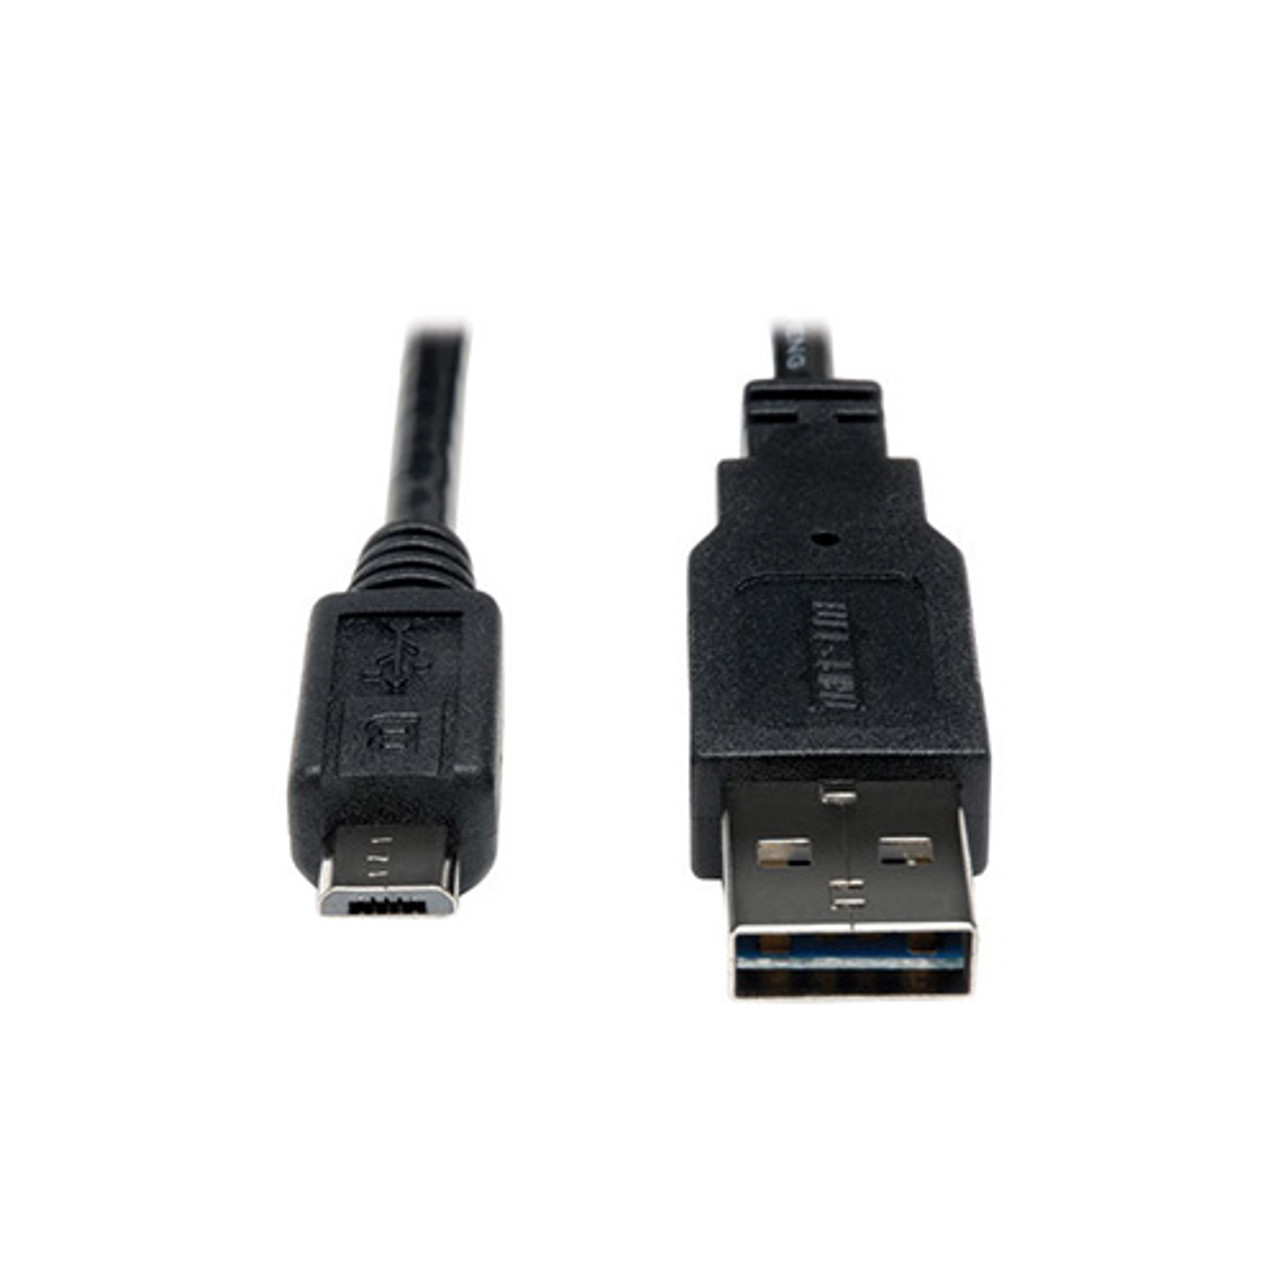 Usb 2.0 high speed. Кабель Micro-USB g5018. Micro-b.1617. U 28 кабель.